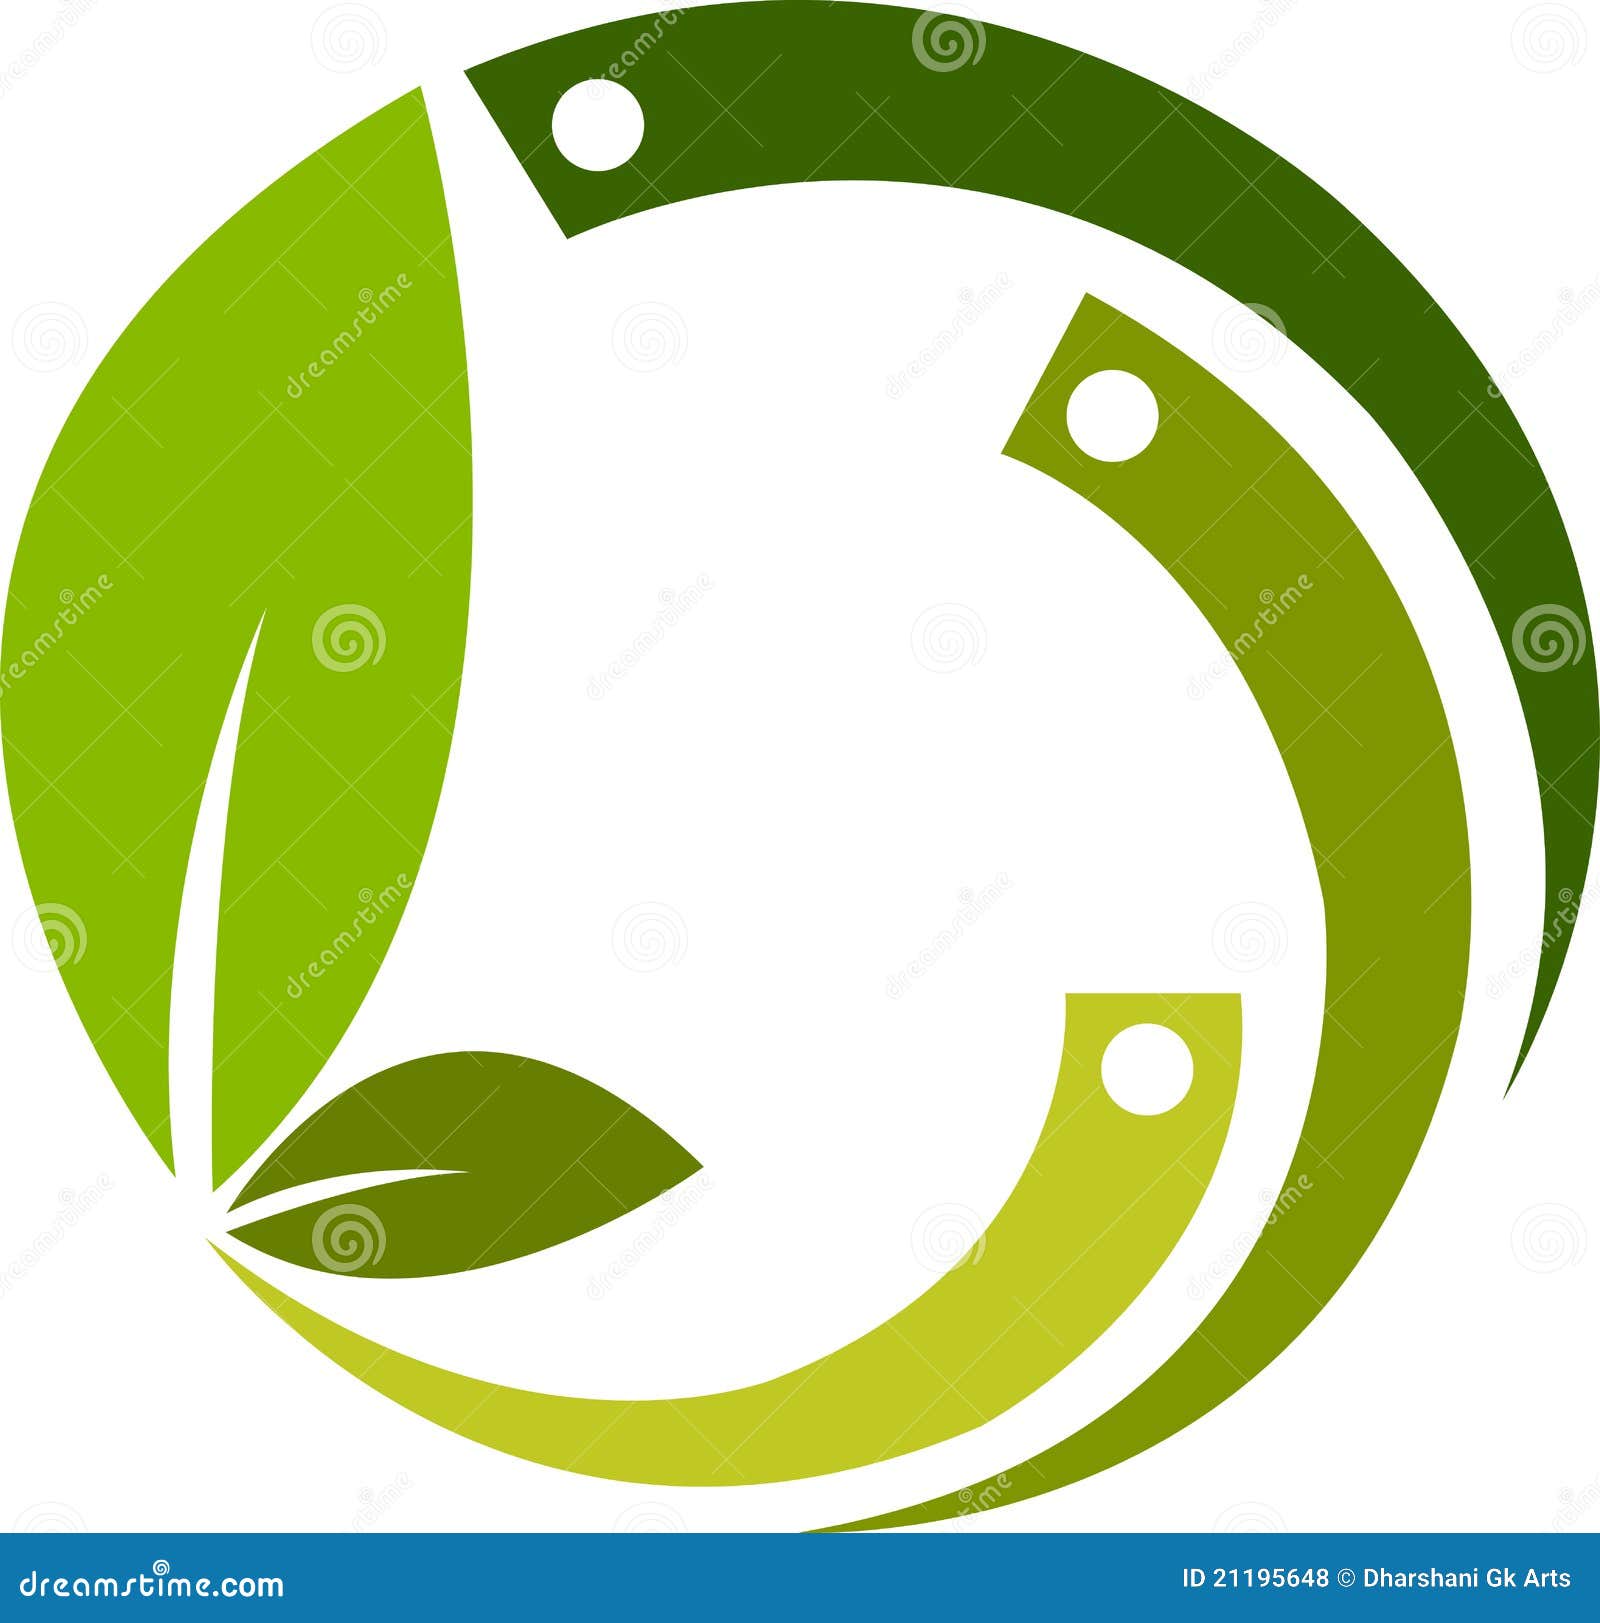 leaf circle clip art - photo #43